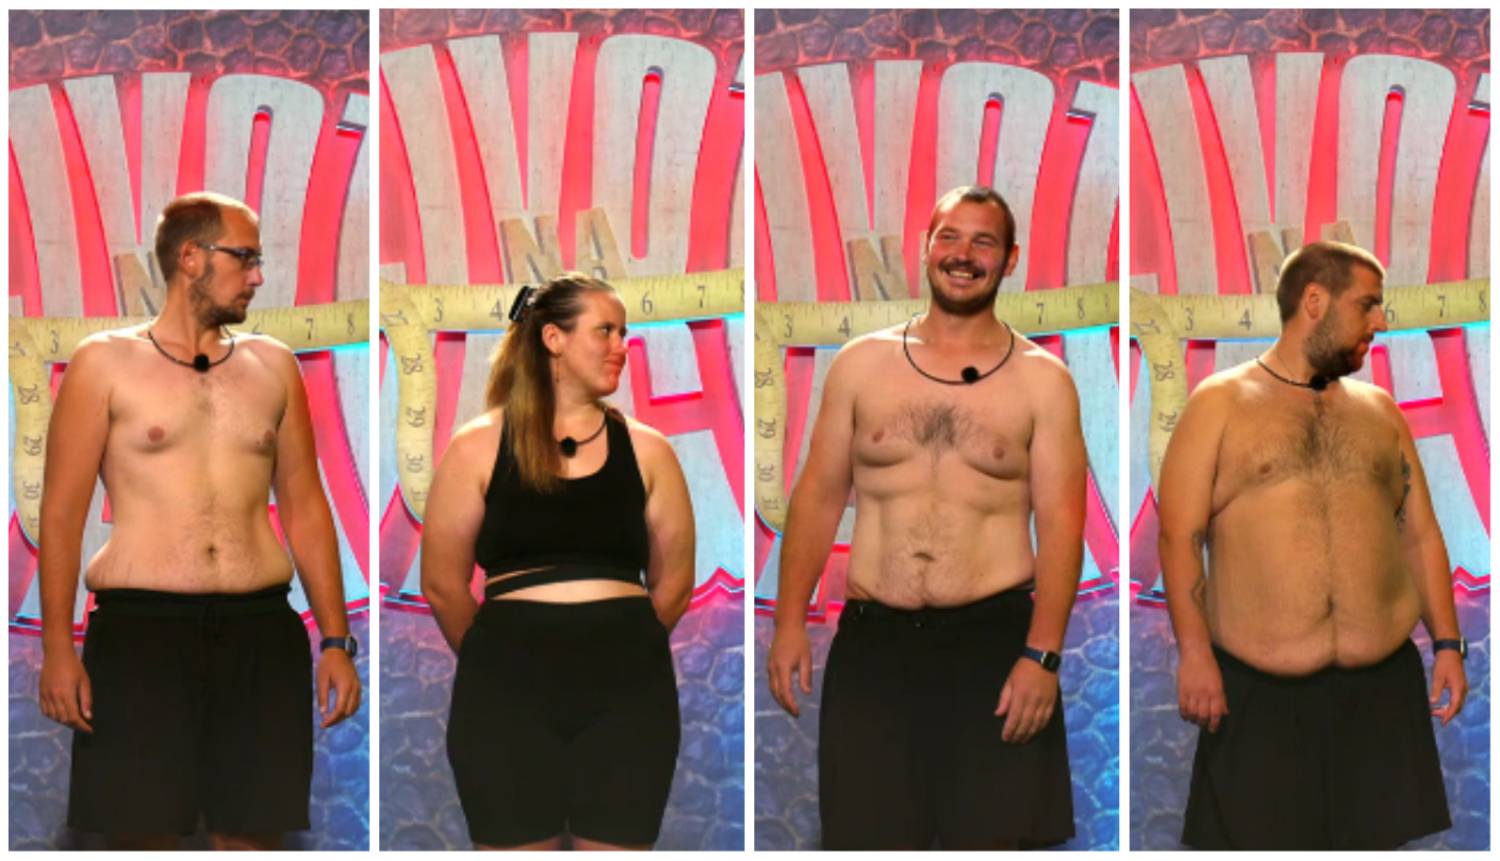 Ovo su finalisti showa 'Život na vagi': Boris, Josip, Roko i Lara idu u borbu za 150.000 kuna